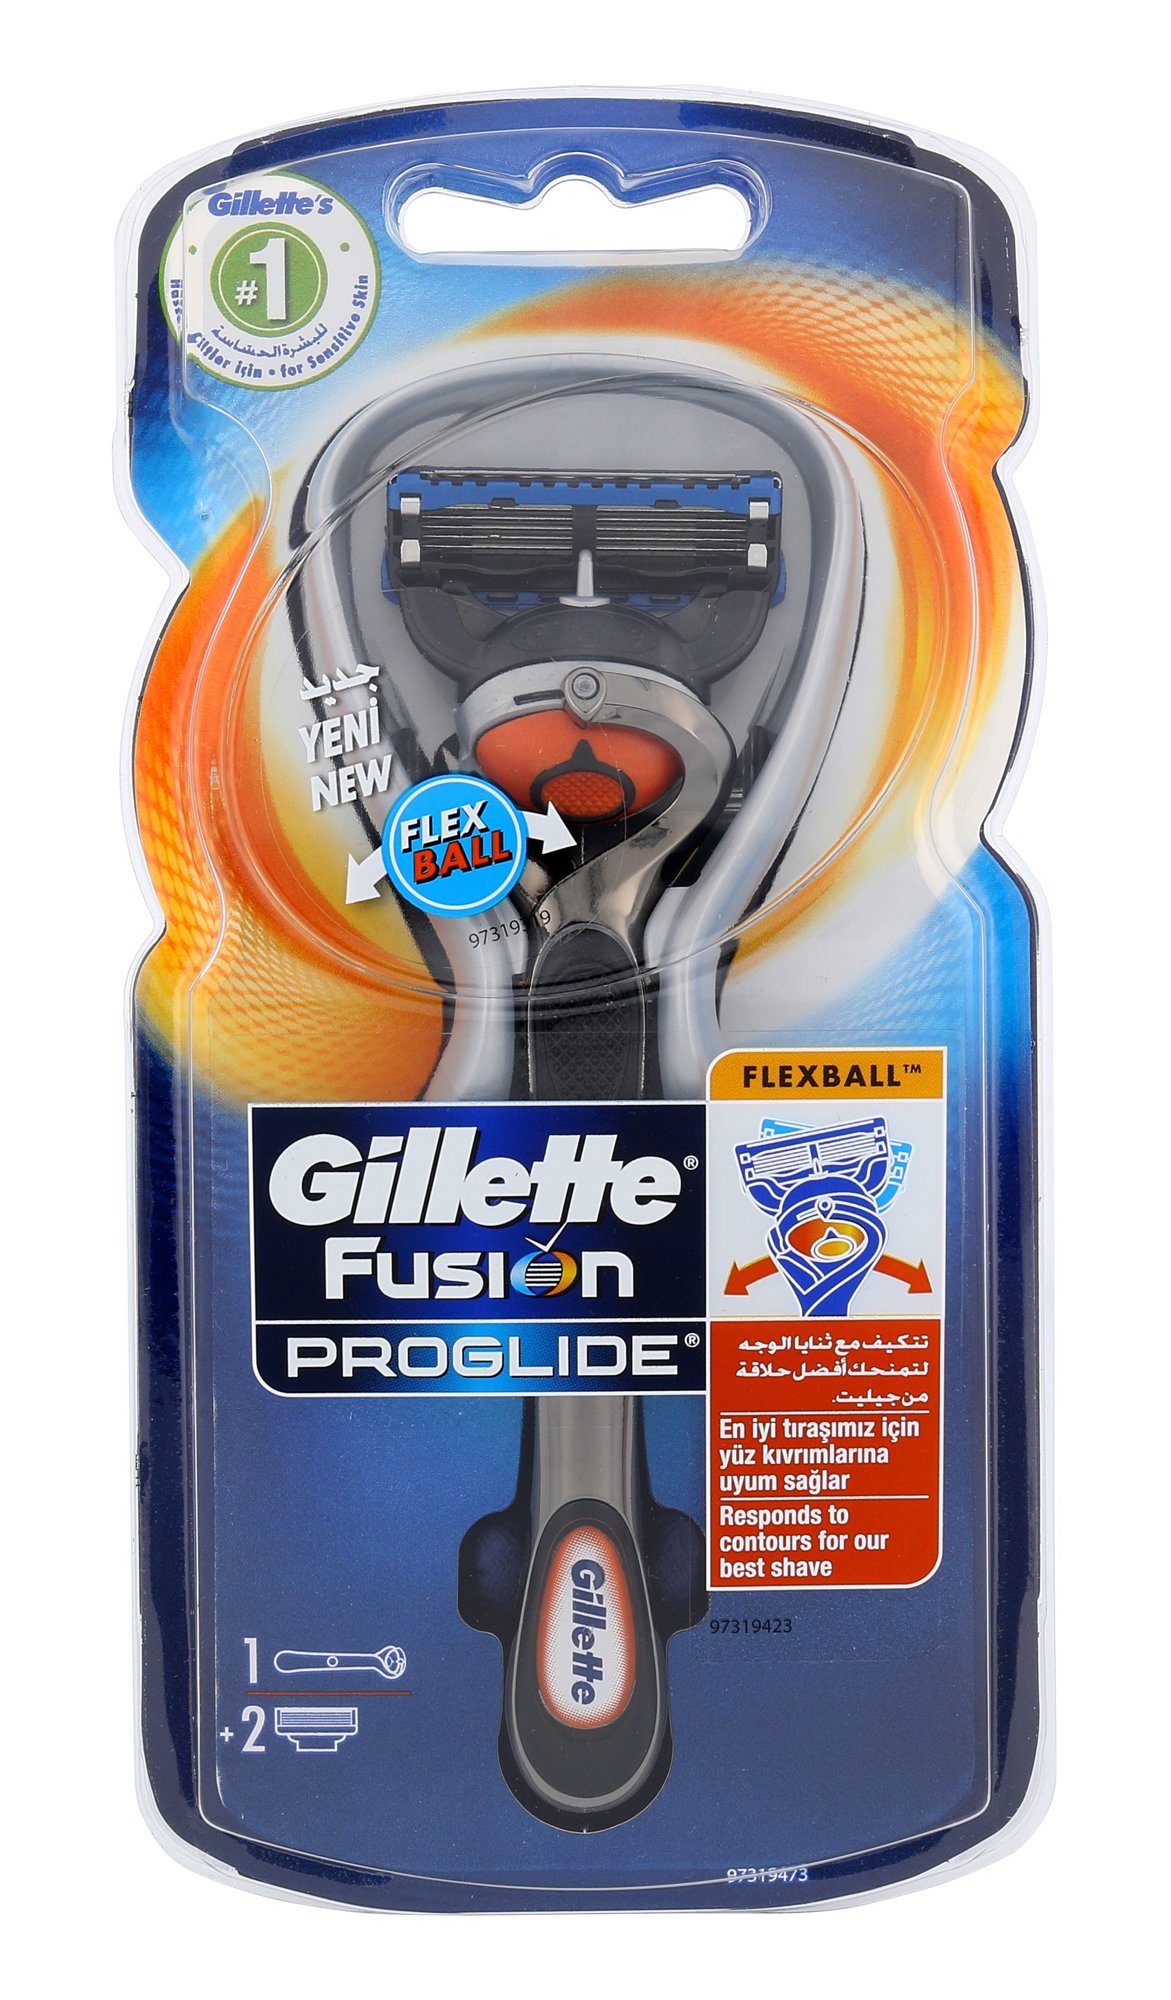 Gillette Fusion Proglide 1vnt skustuvas